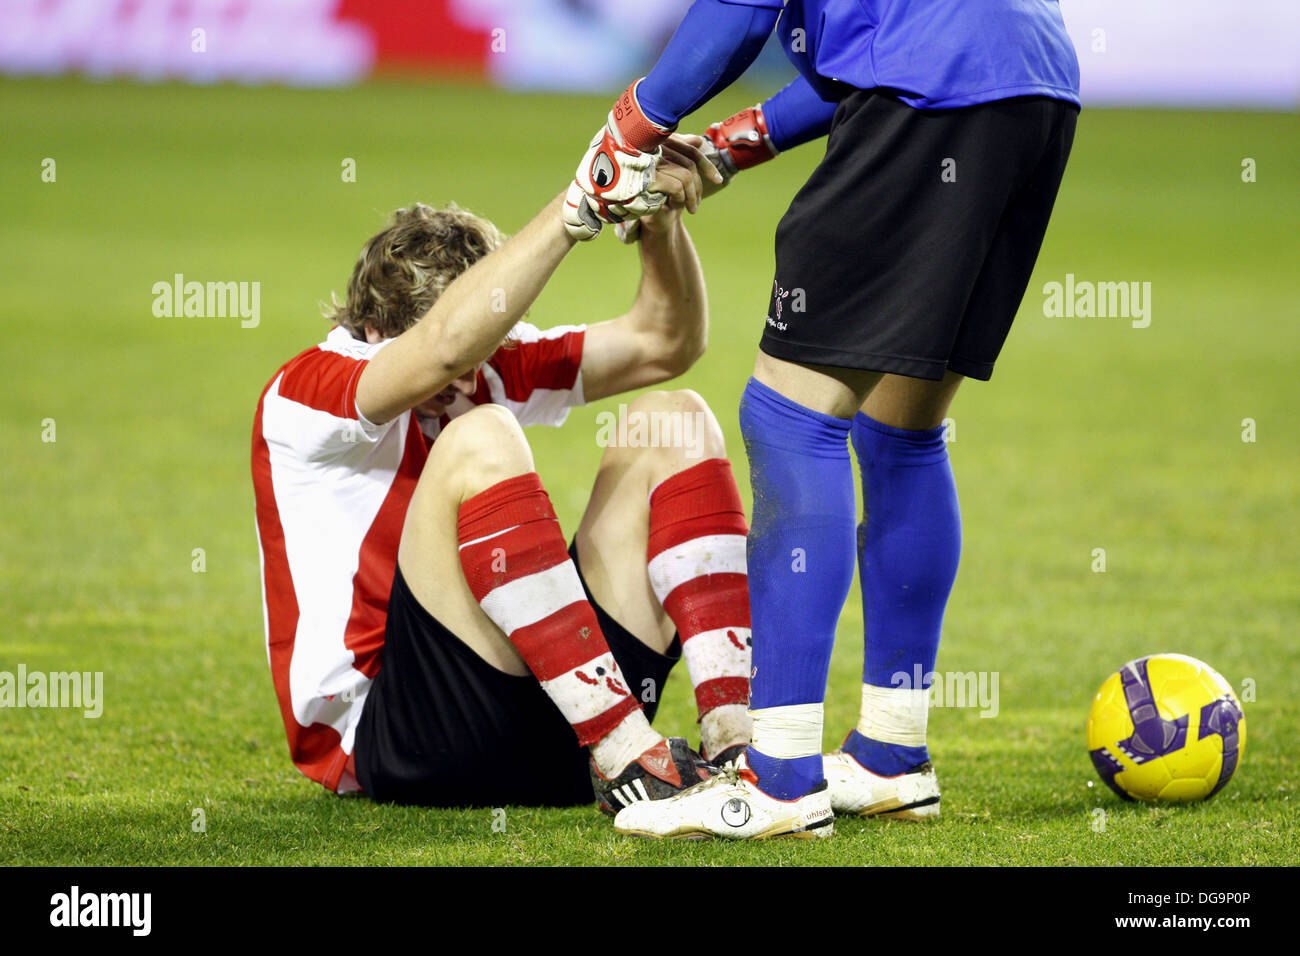 Athletic Bilbao Goalkeeper Stockfotos & Athletic Bilbao Goalkeeper Bilder - Alamy1300 x 956